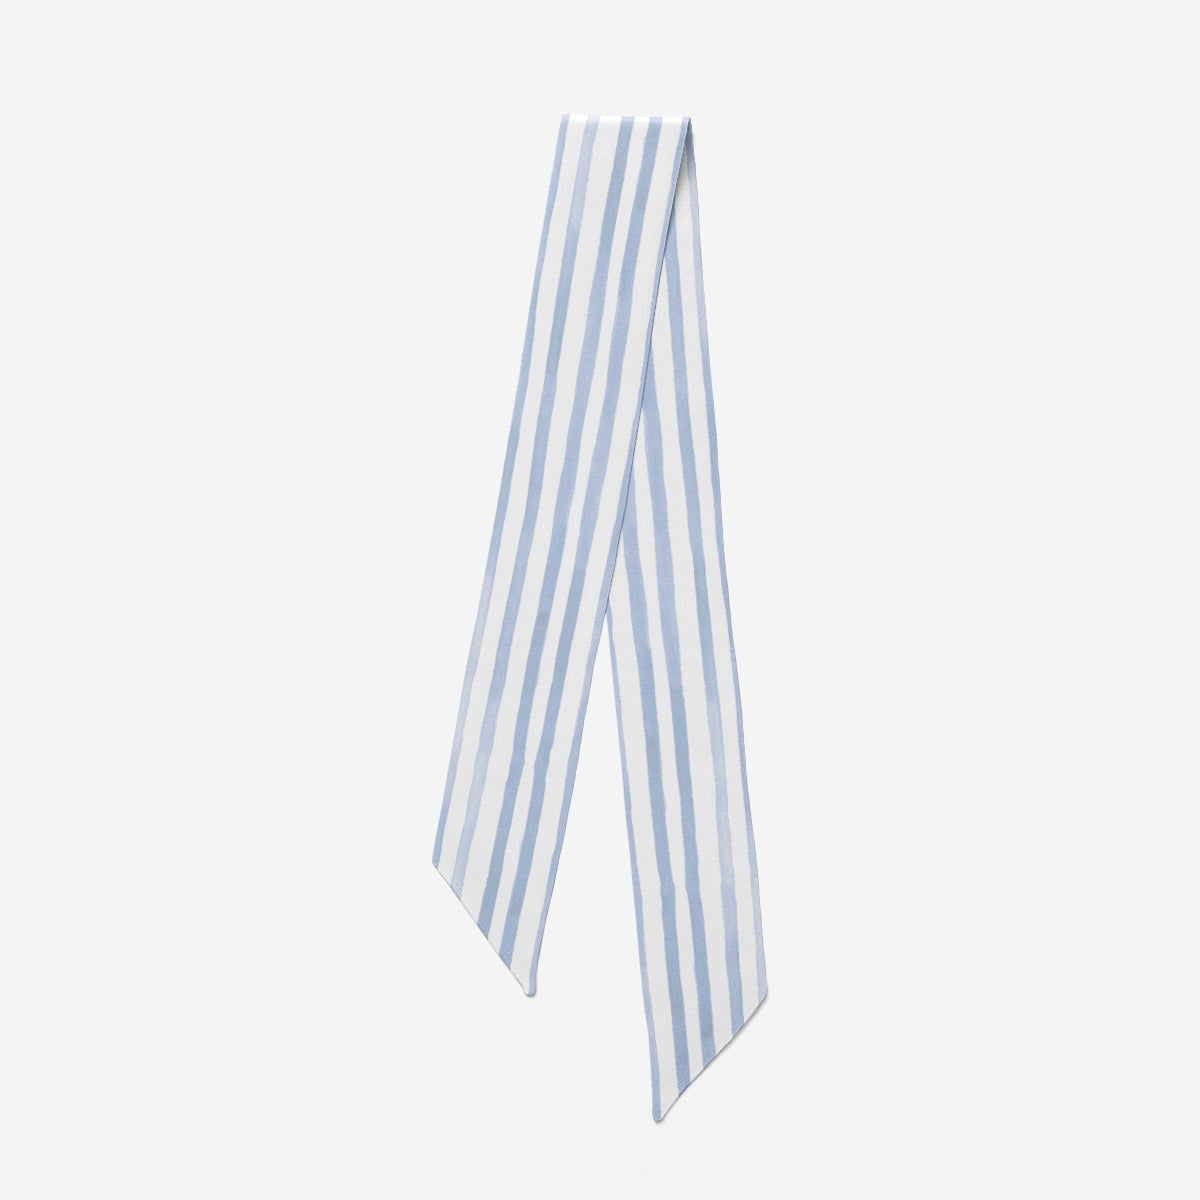 Silk hair tie with a simple blue stripe design